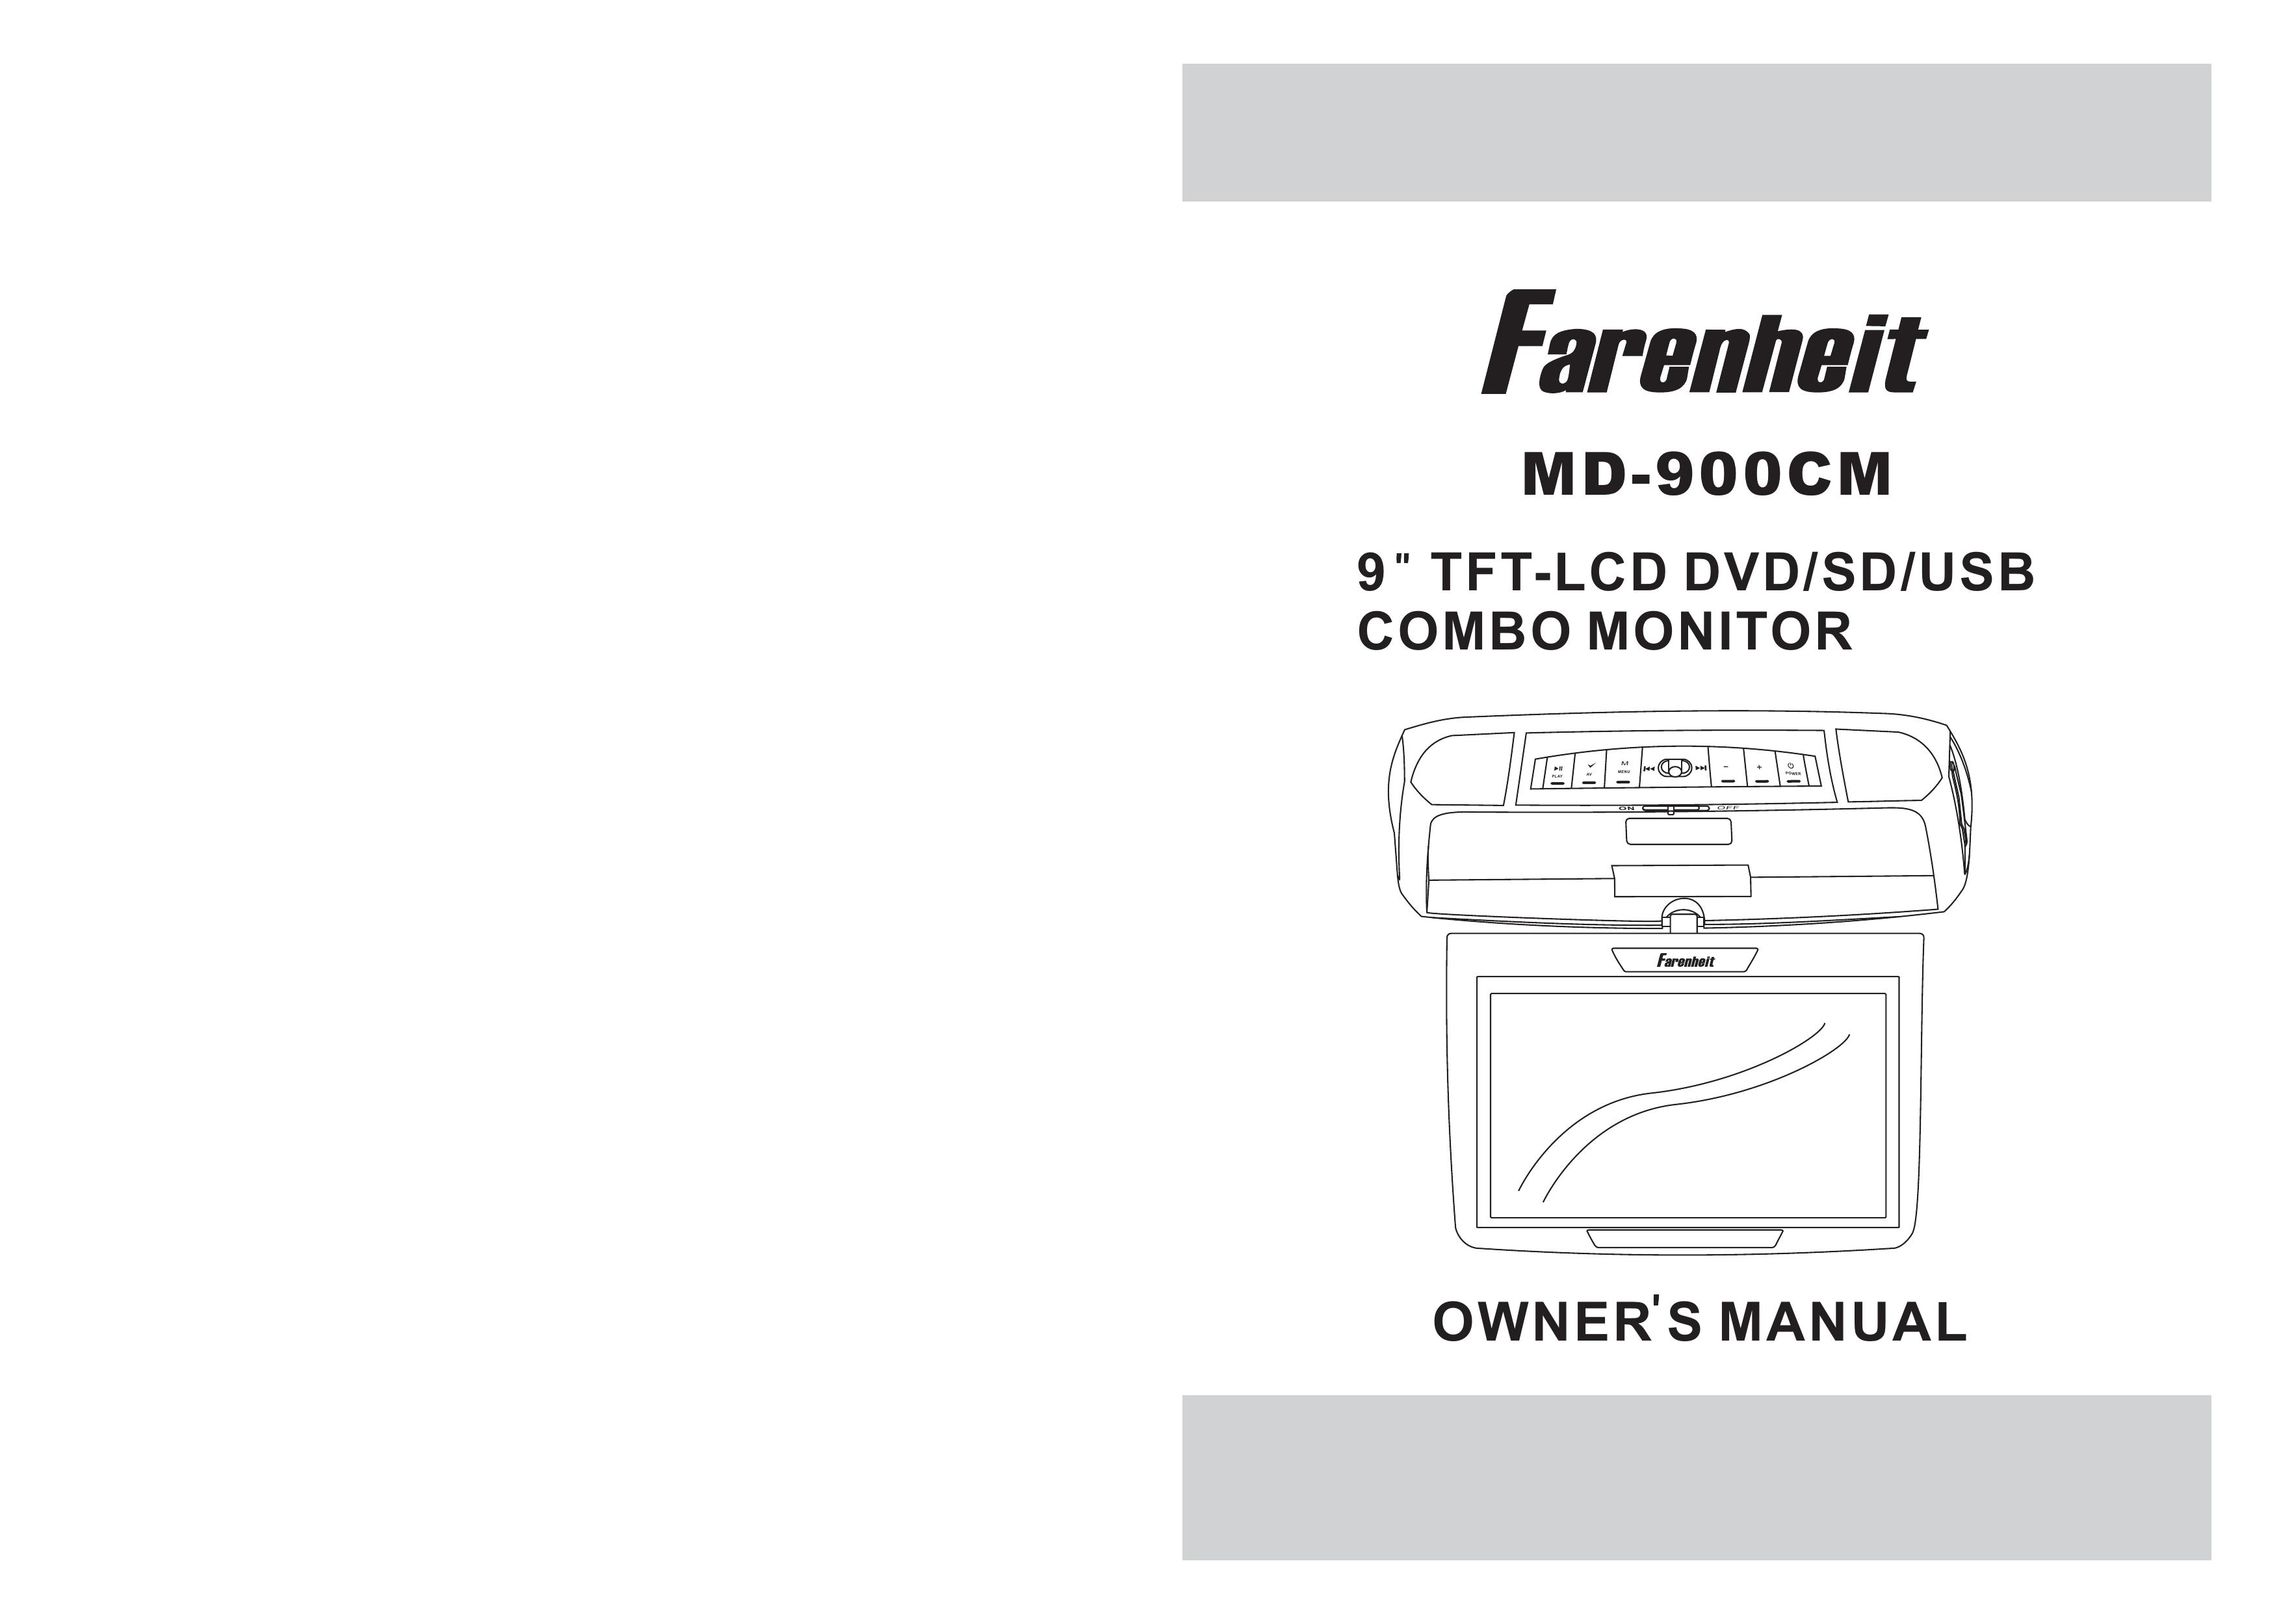 Farenheit Technologies MD-900CM Car Video System User Manual